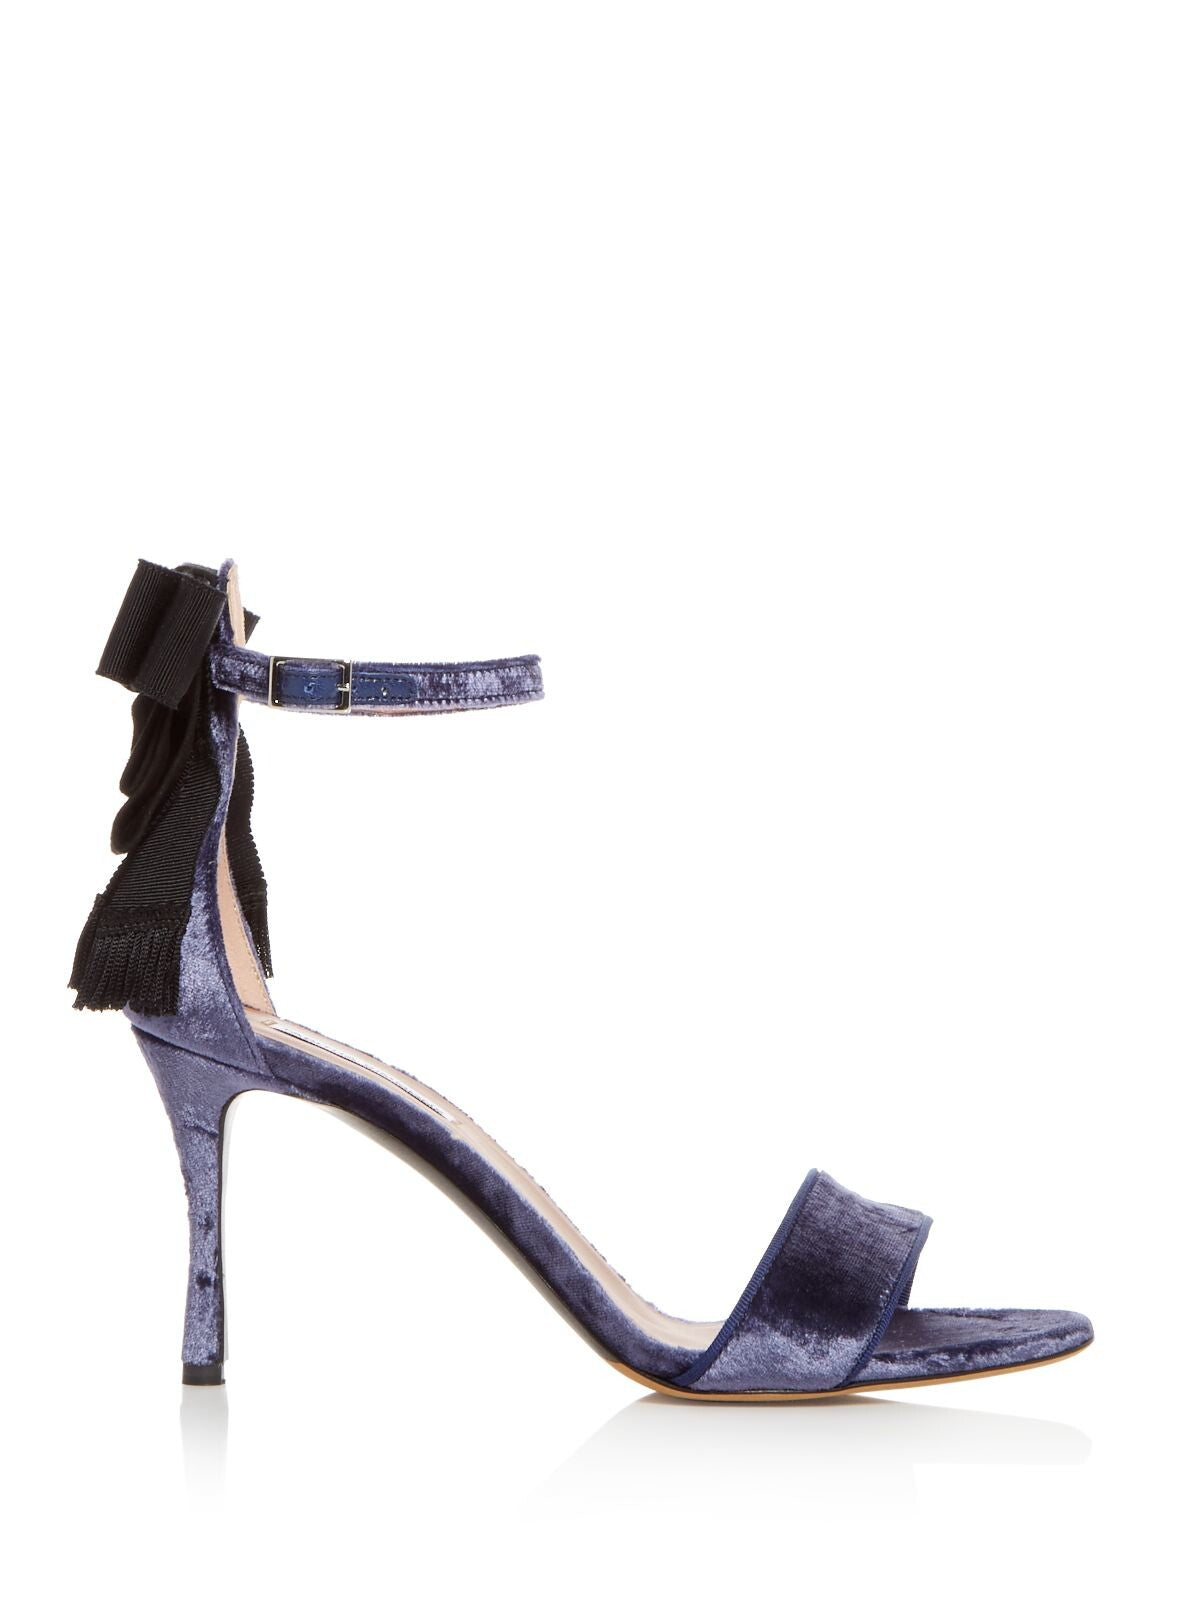 TABITHA SIMMONS Womens Blue Velvet Bow Accent Tasseled Frances Almond Toe Stiletto Buckle Dress Sandals Shoes